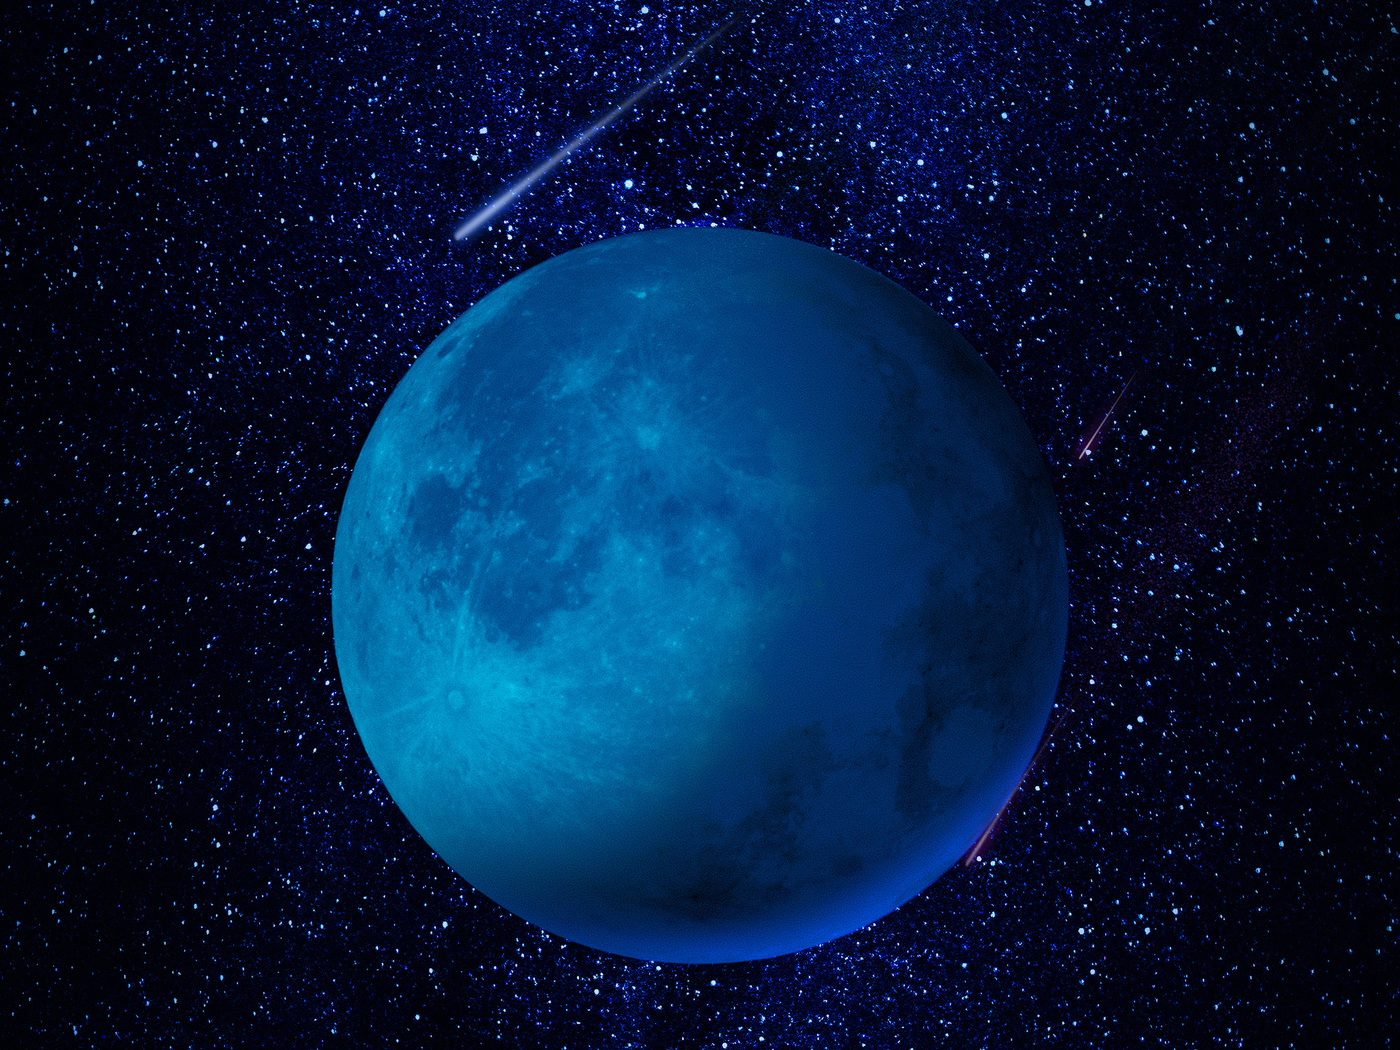 blue-planet-and-stars-digital-universe-4k-c3.jpg